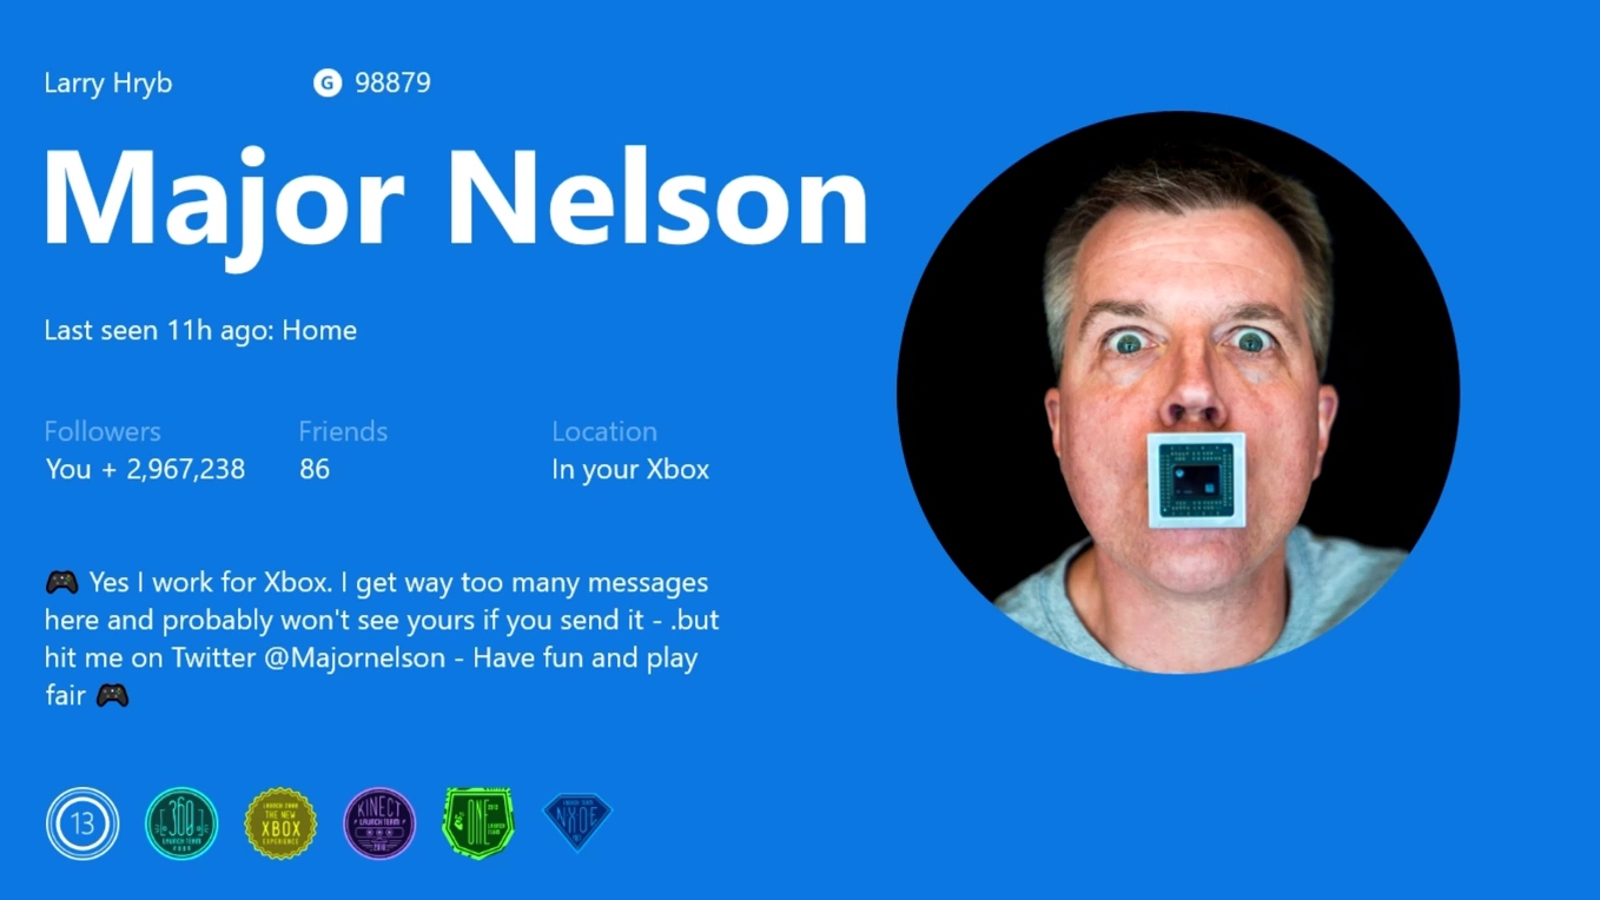 Xbox One update adds custom Gamerpics, co-streaming and more